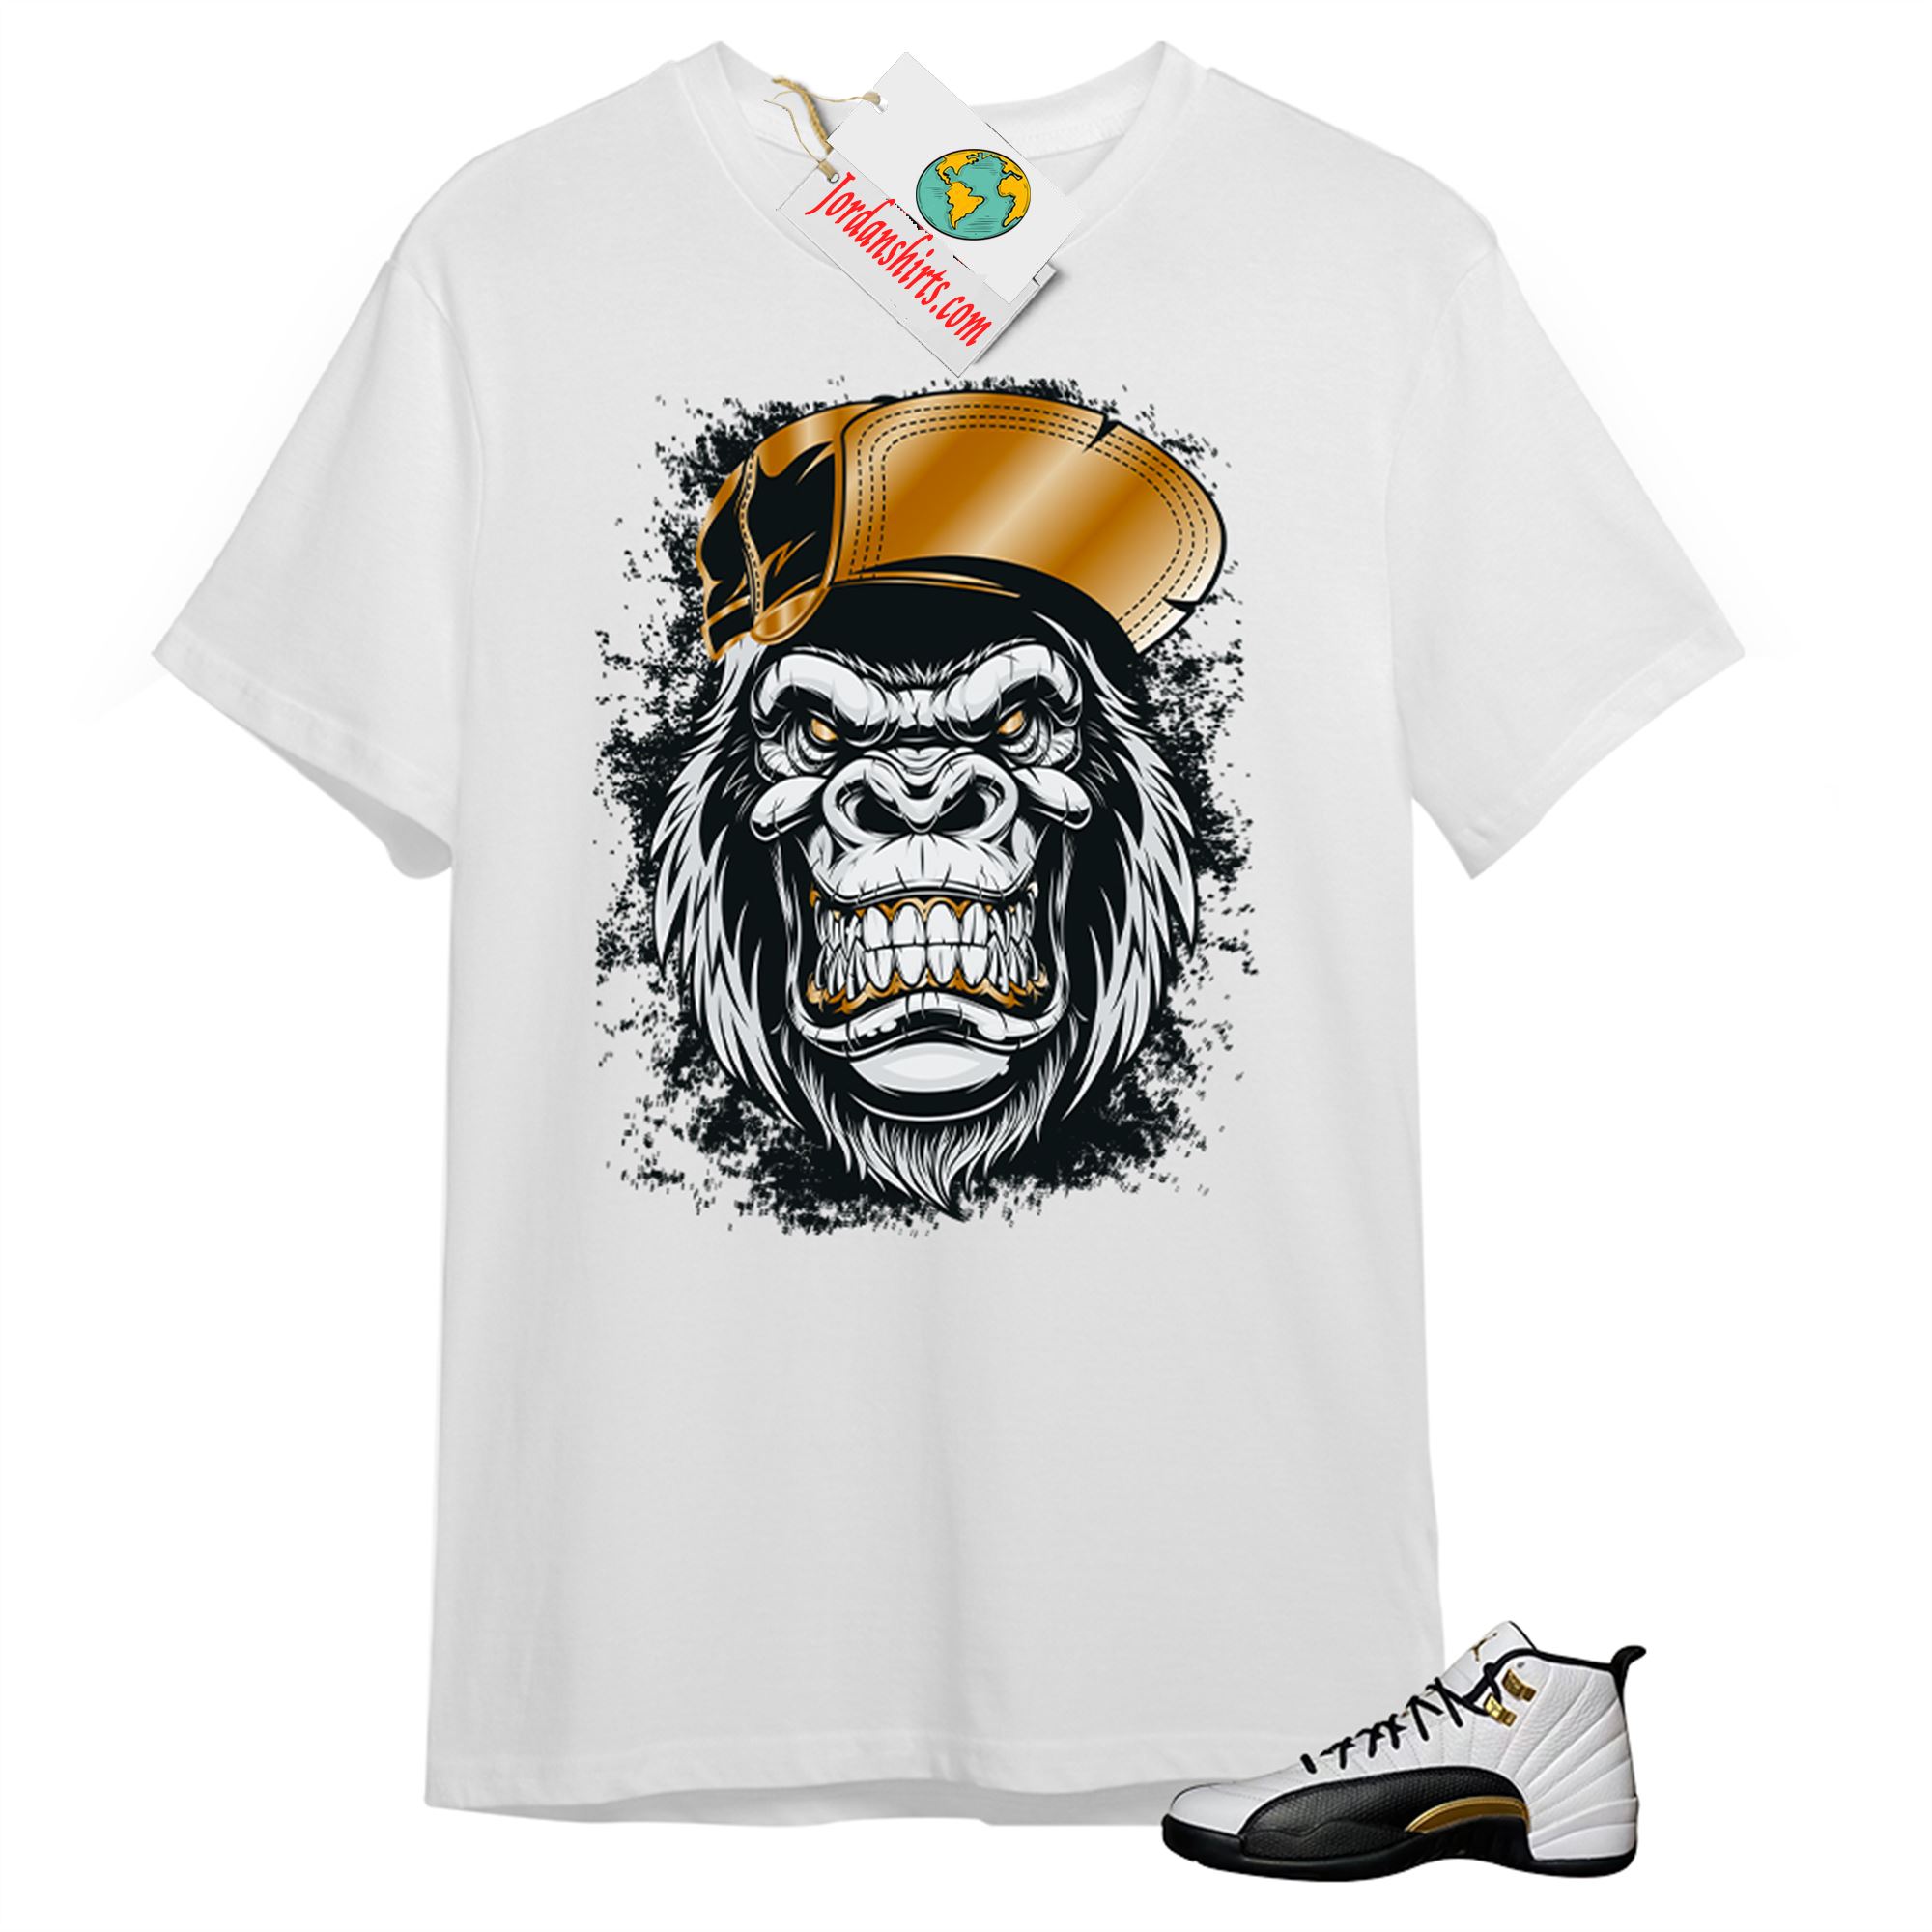 Jordan 12 Shirt, Ferocious Gorilla White T-shirt Air Jordan 12 Royalty 12s Full Size Up To 5xl